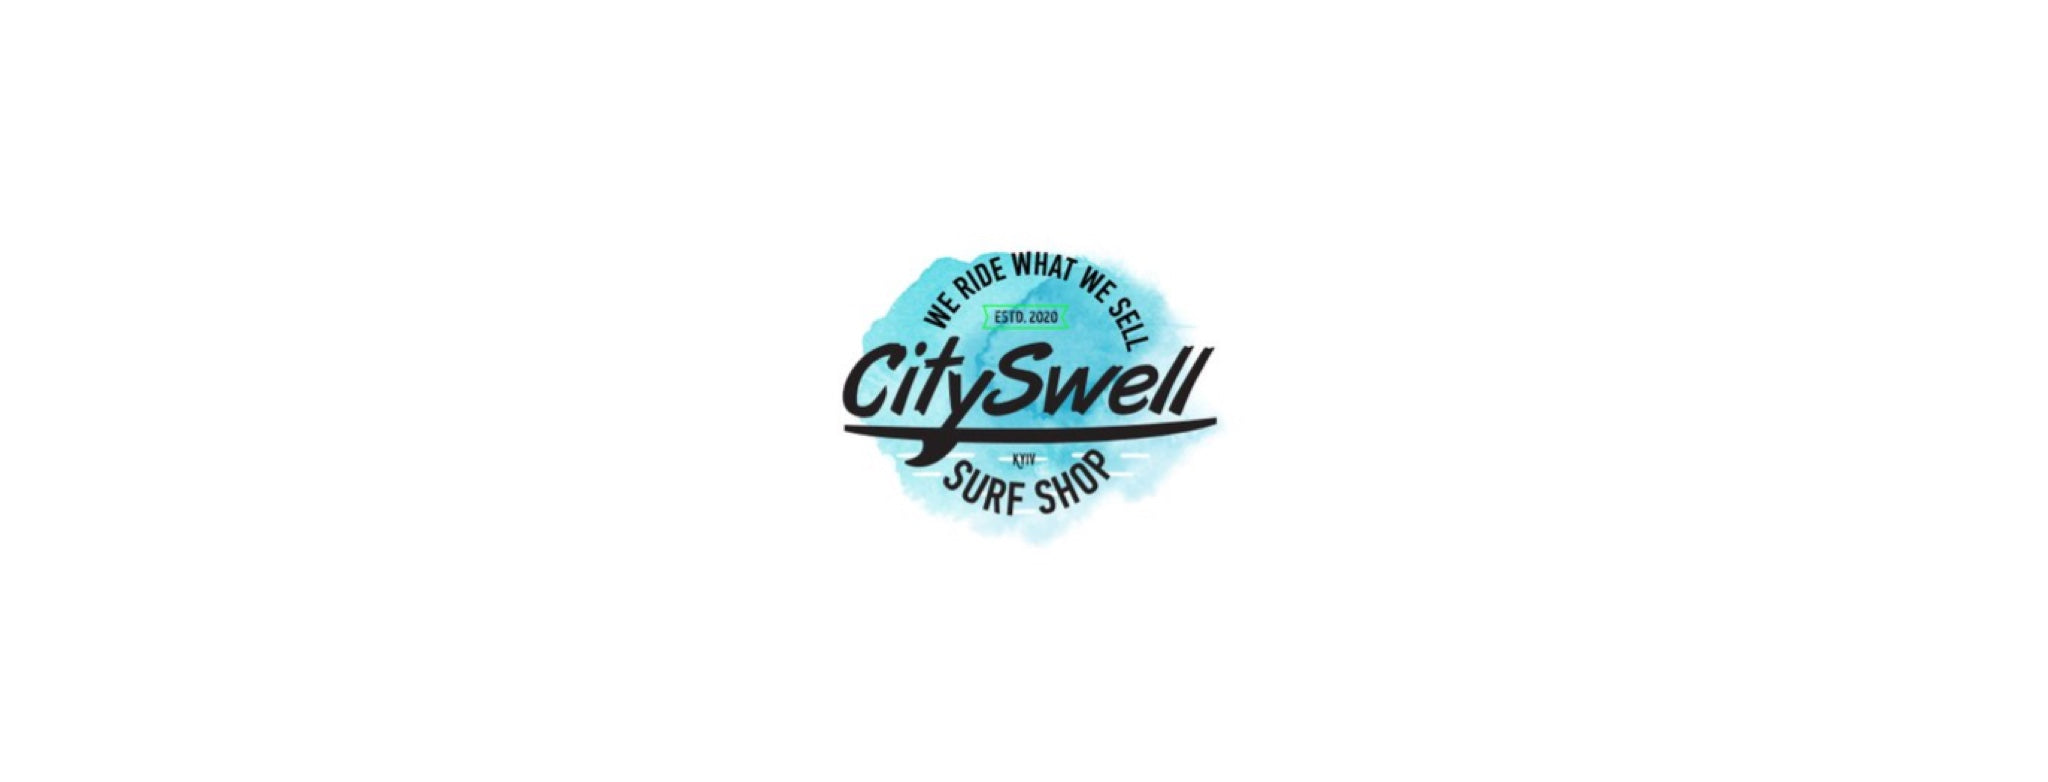 CitySwell